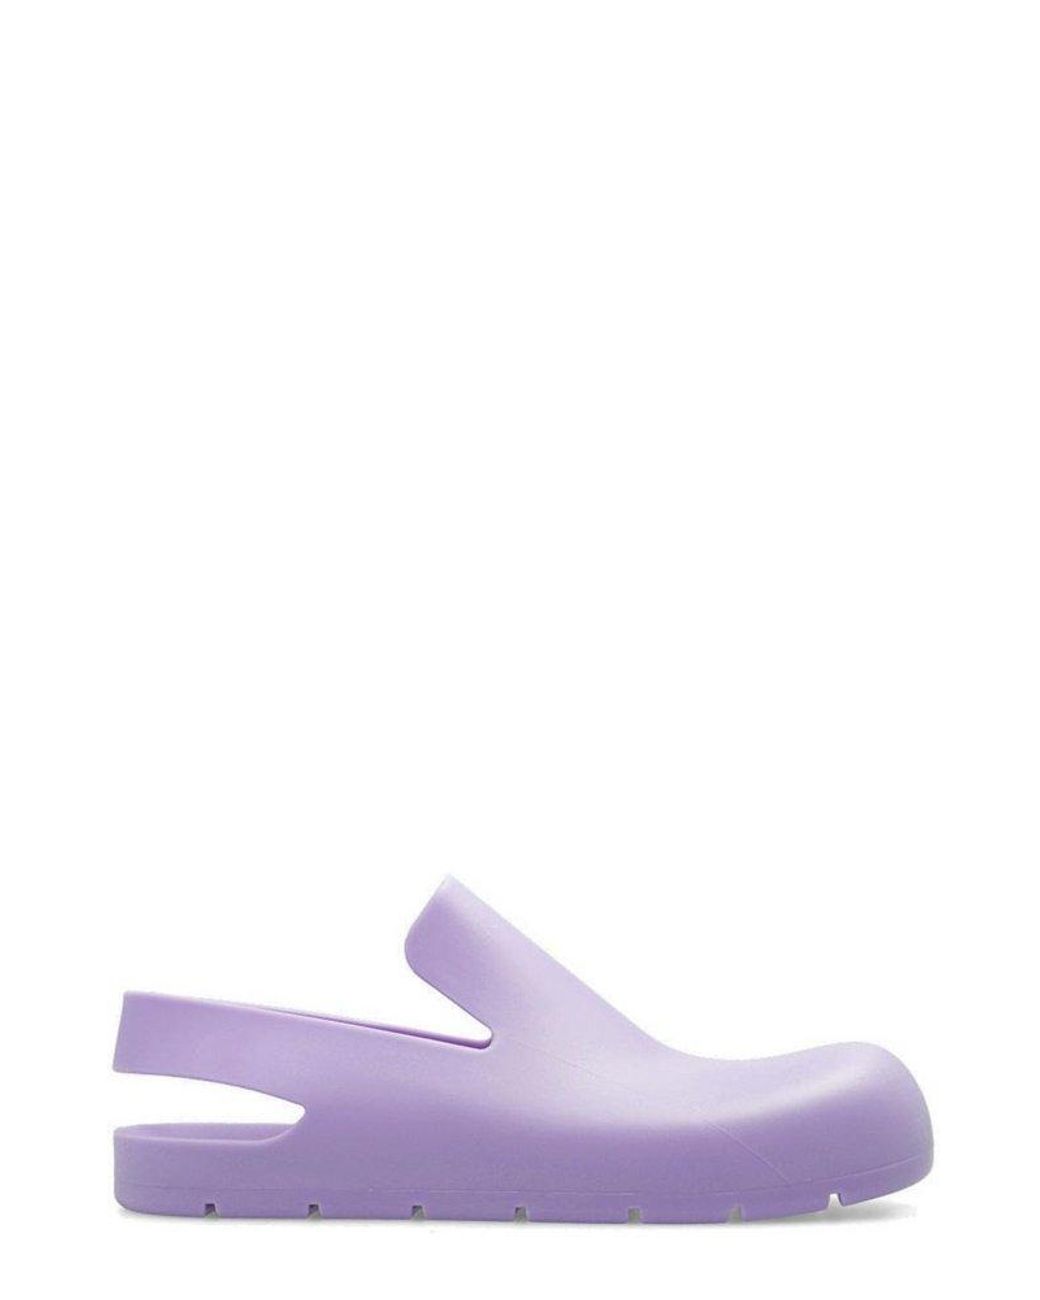 Bottega Veneta Puddle Sandals in Purple | Lyst